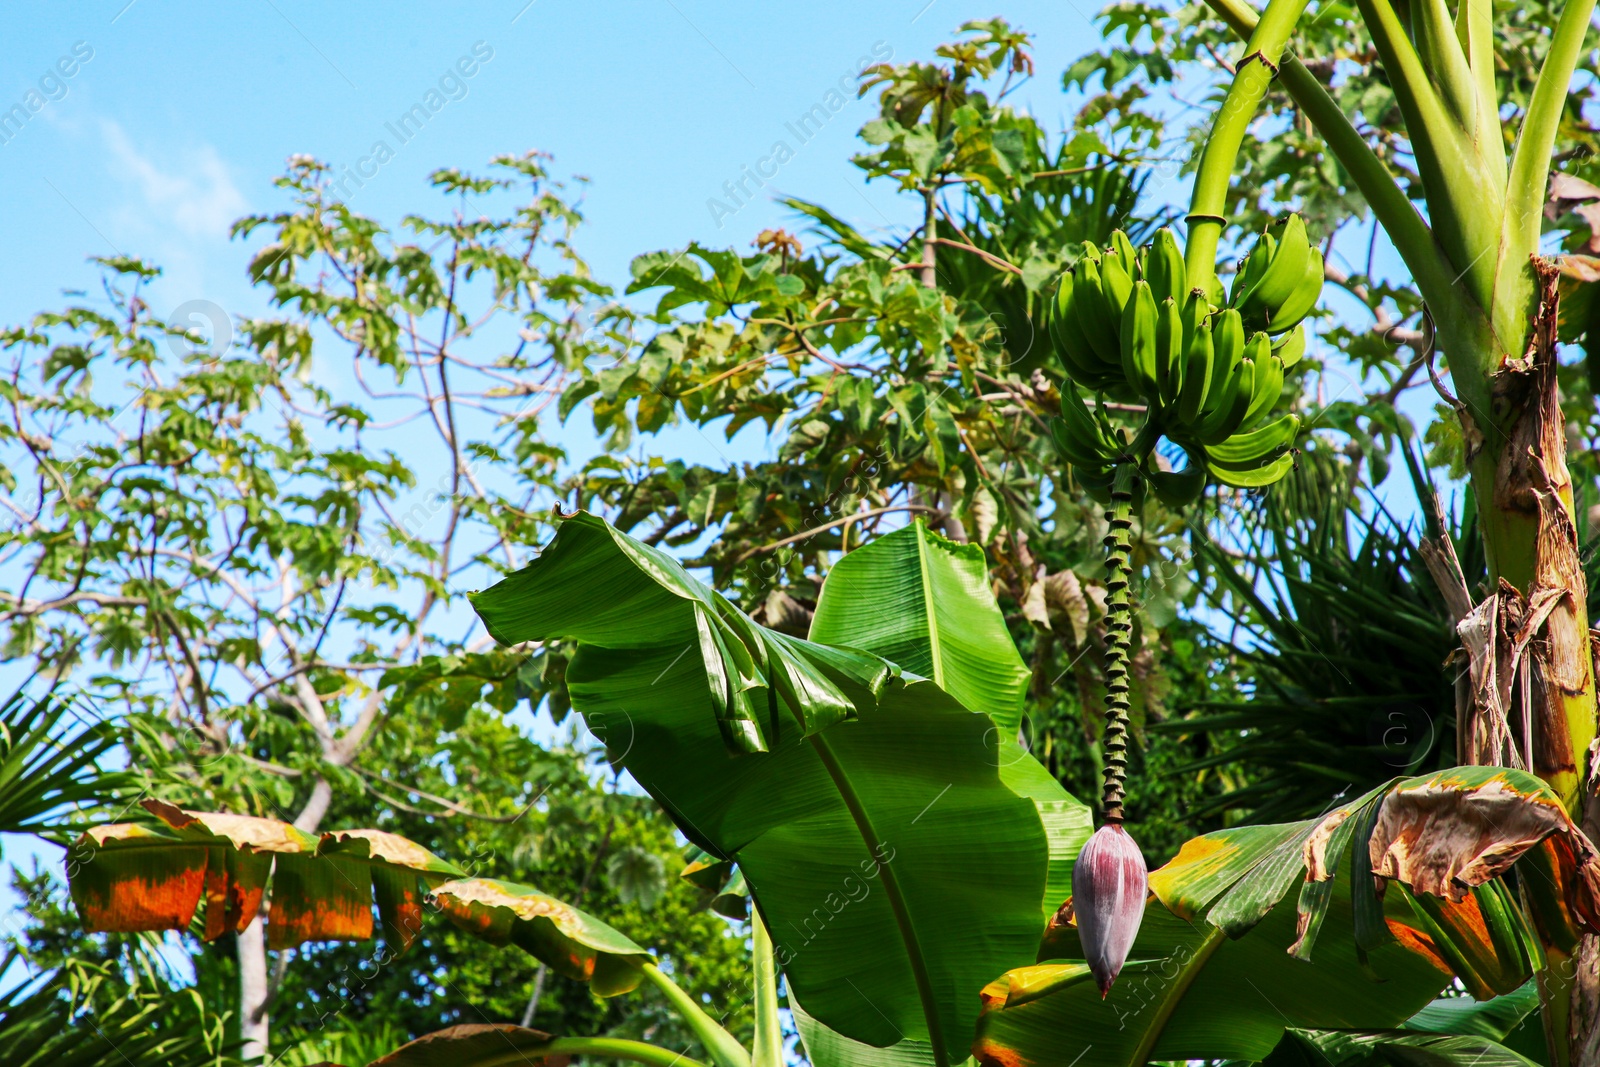 Photo of Unripe bananas growing on tree against blue sky